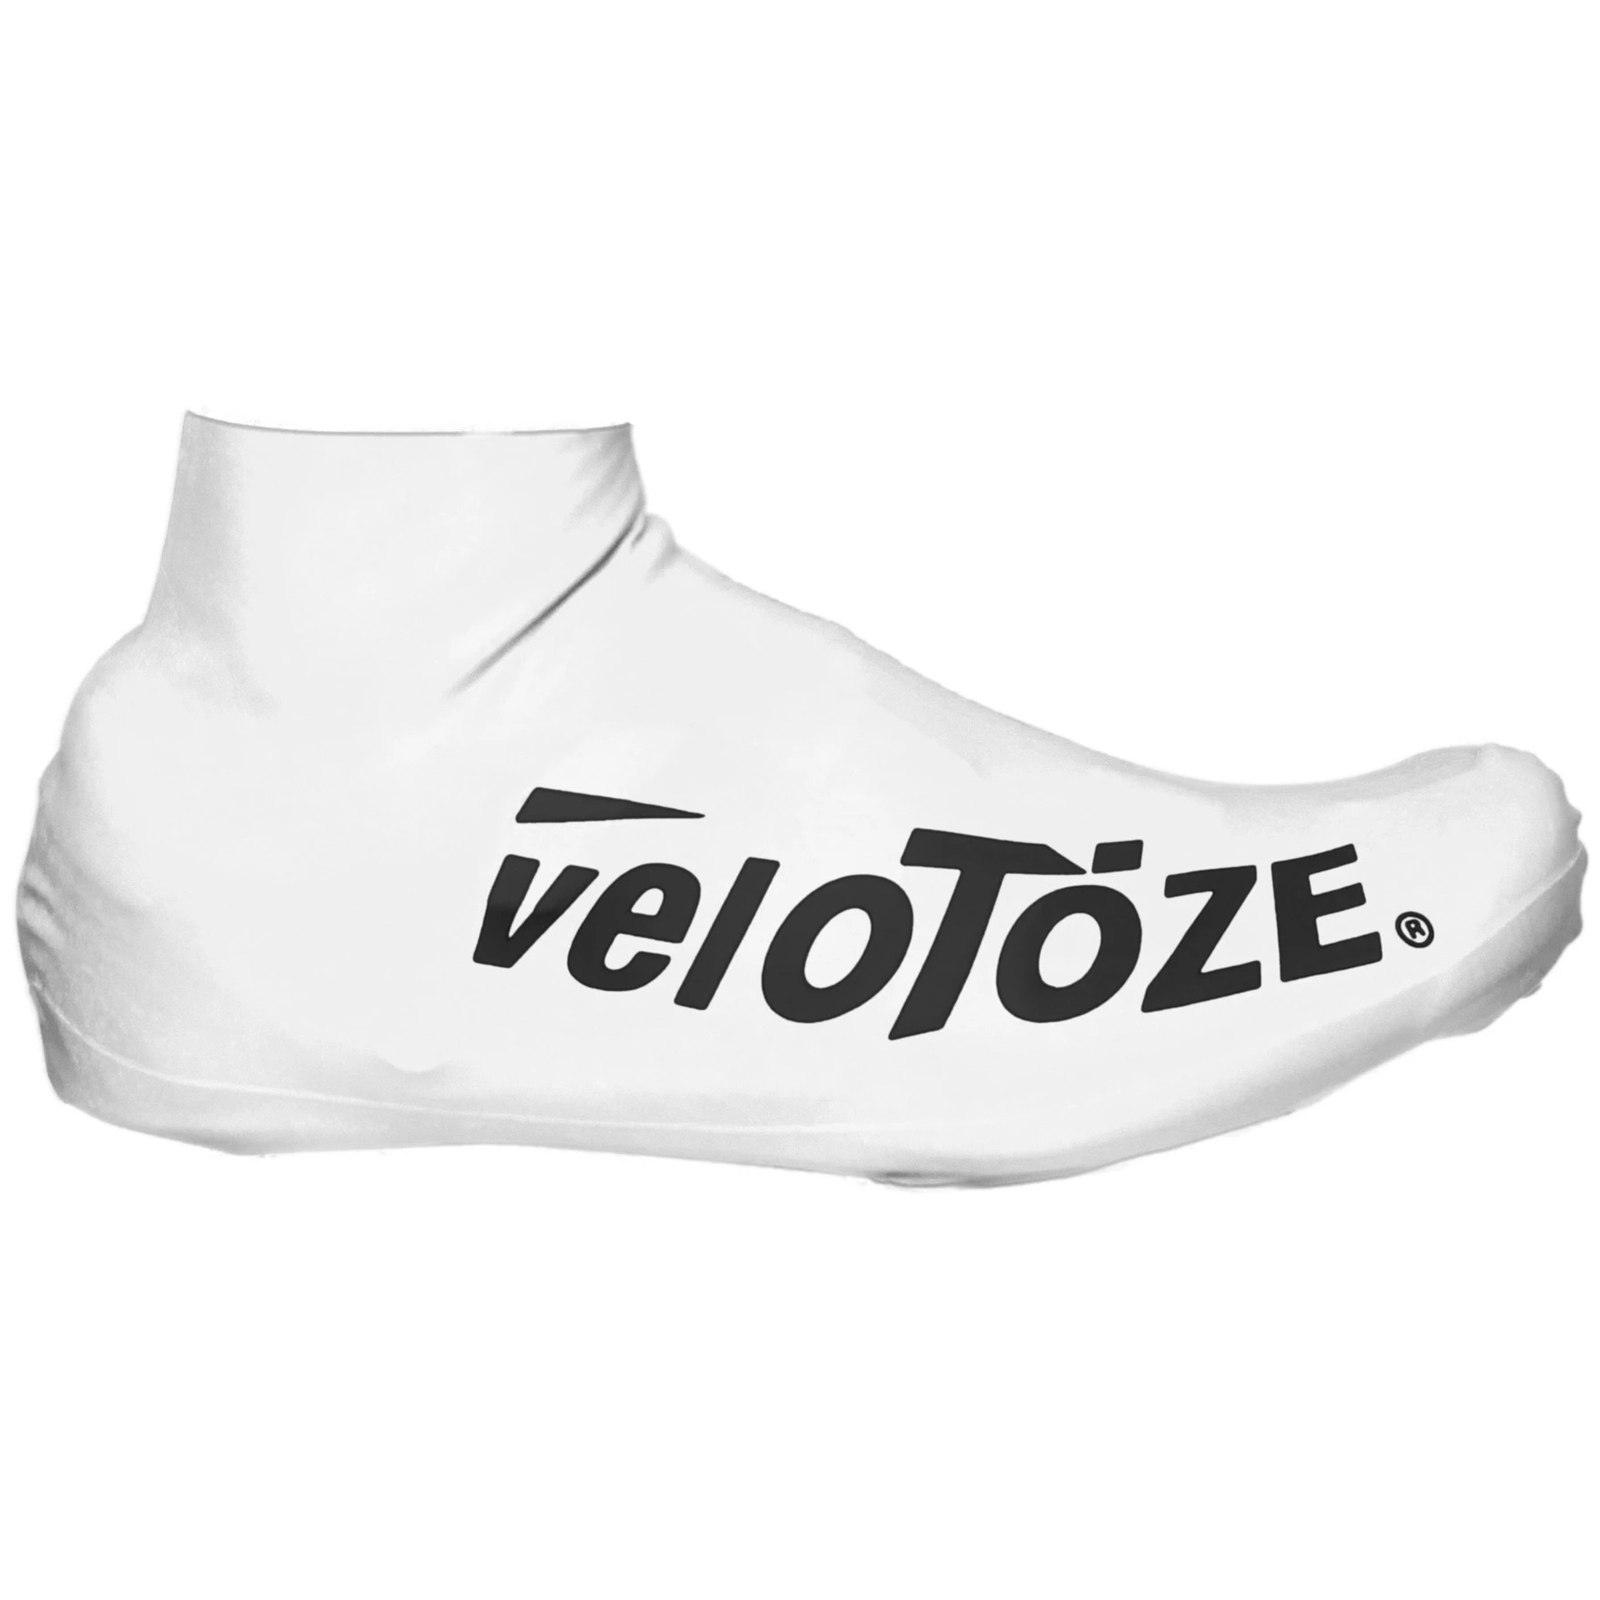 Productfoto van veloToze Short Shoe Cover Road 2.0 - white